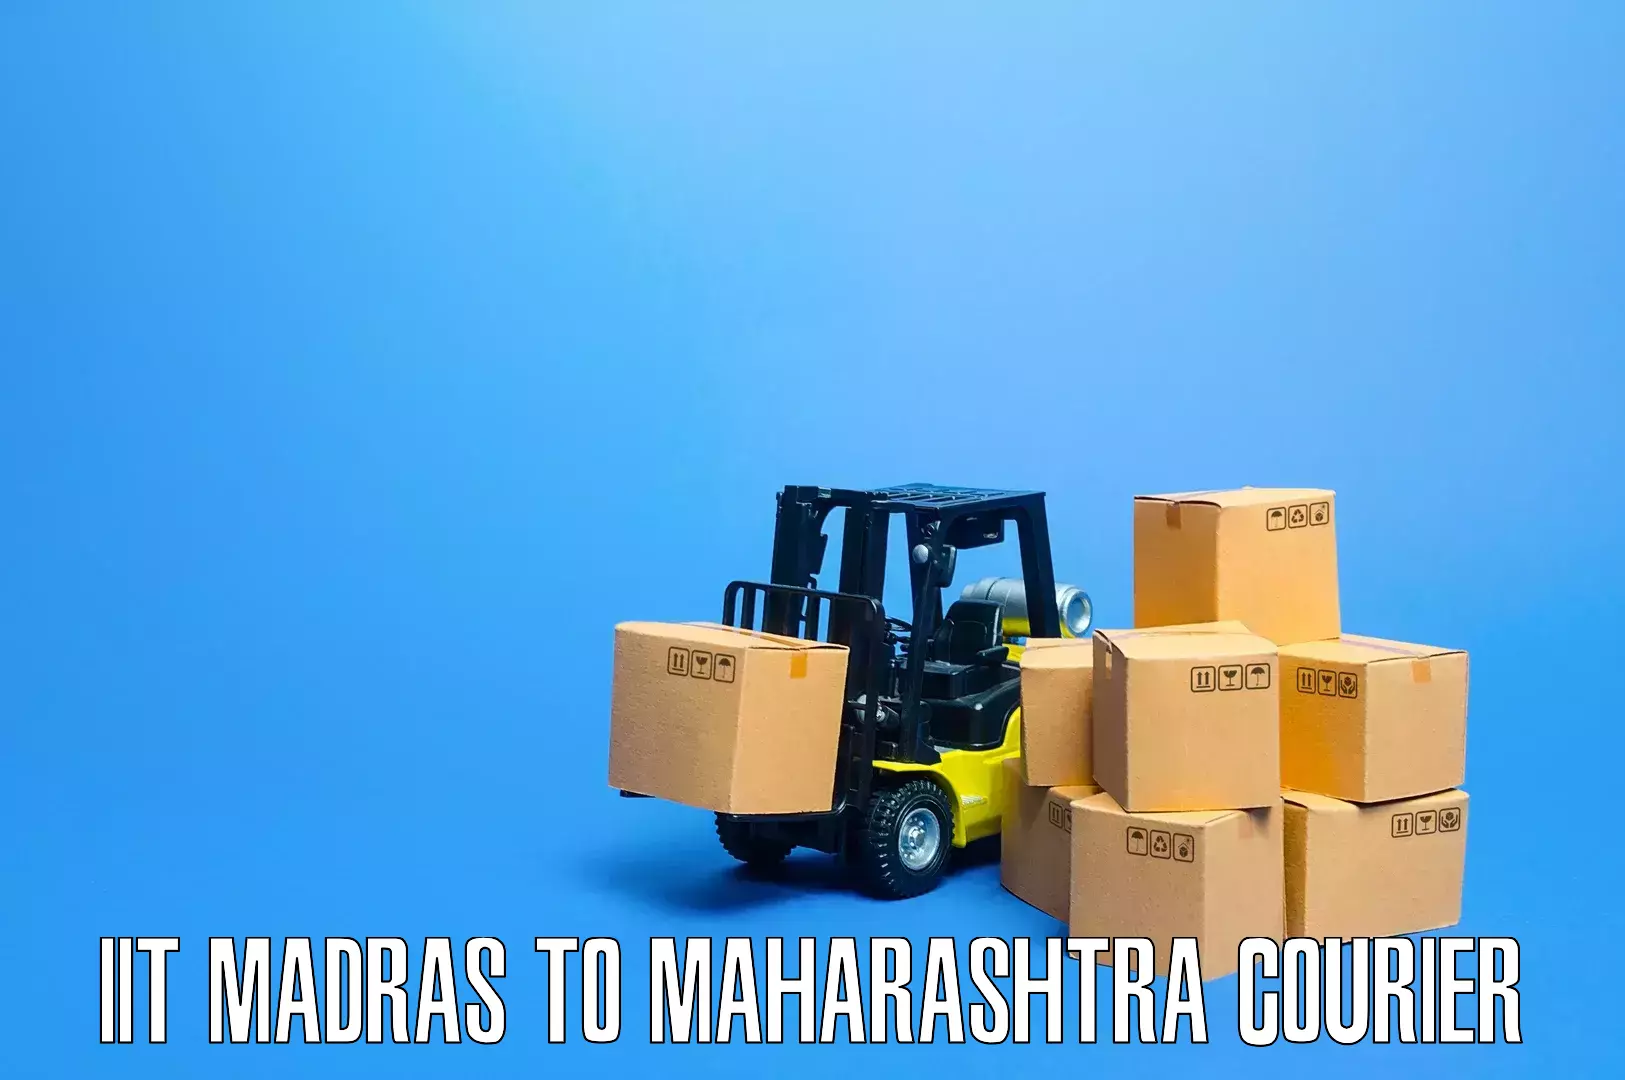 Professional moving company IIT Madras to Shirpur